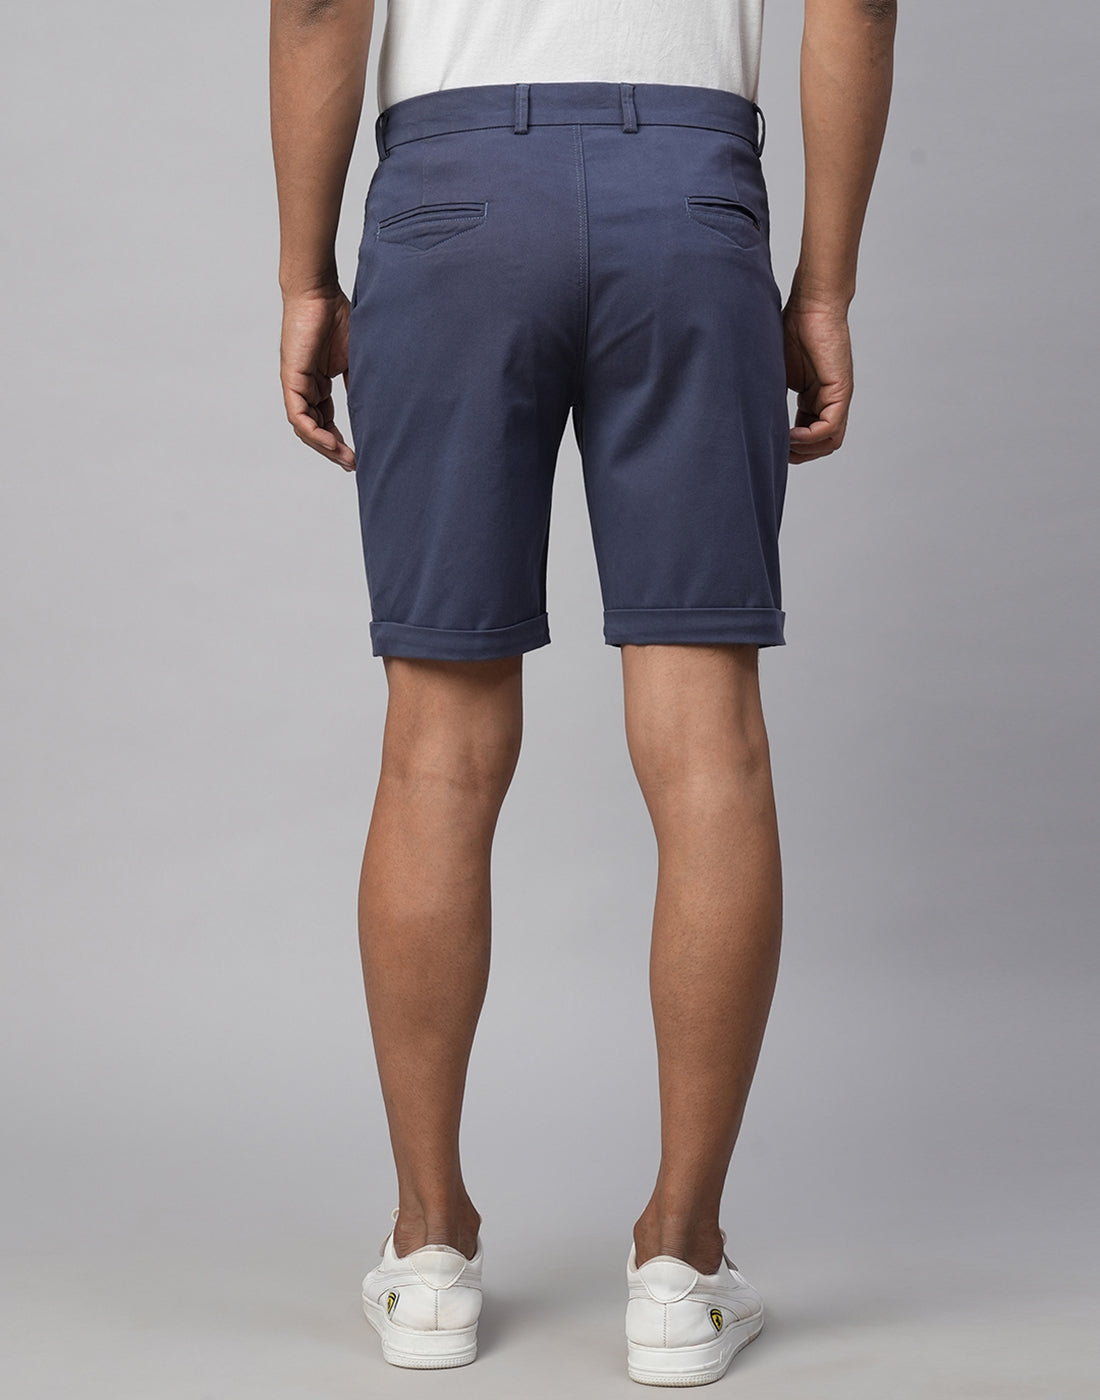 Genips Men'S Dark Blue Cotton Lycra Slim Fit Shorts